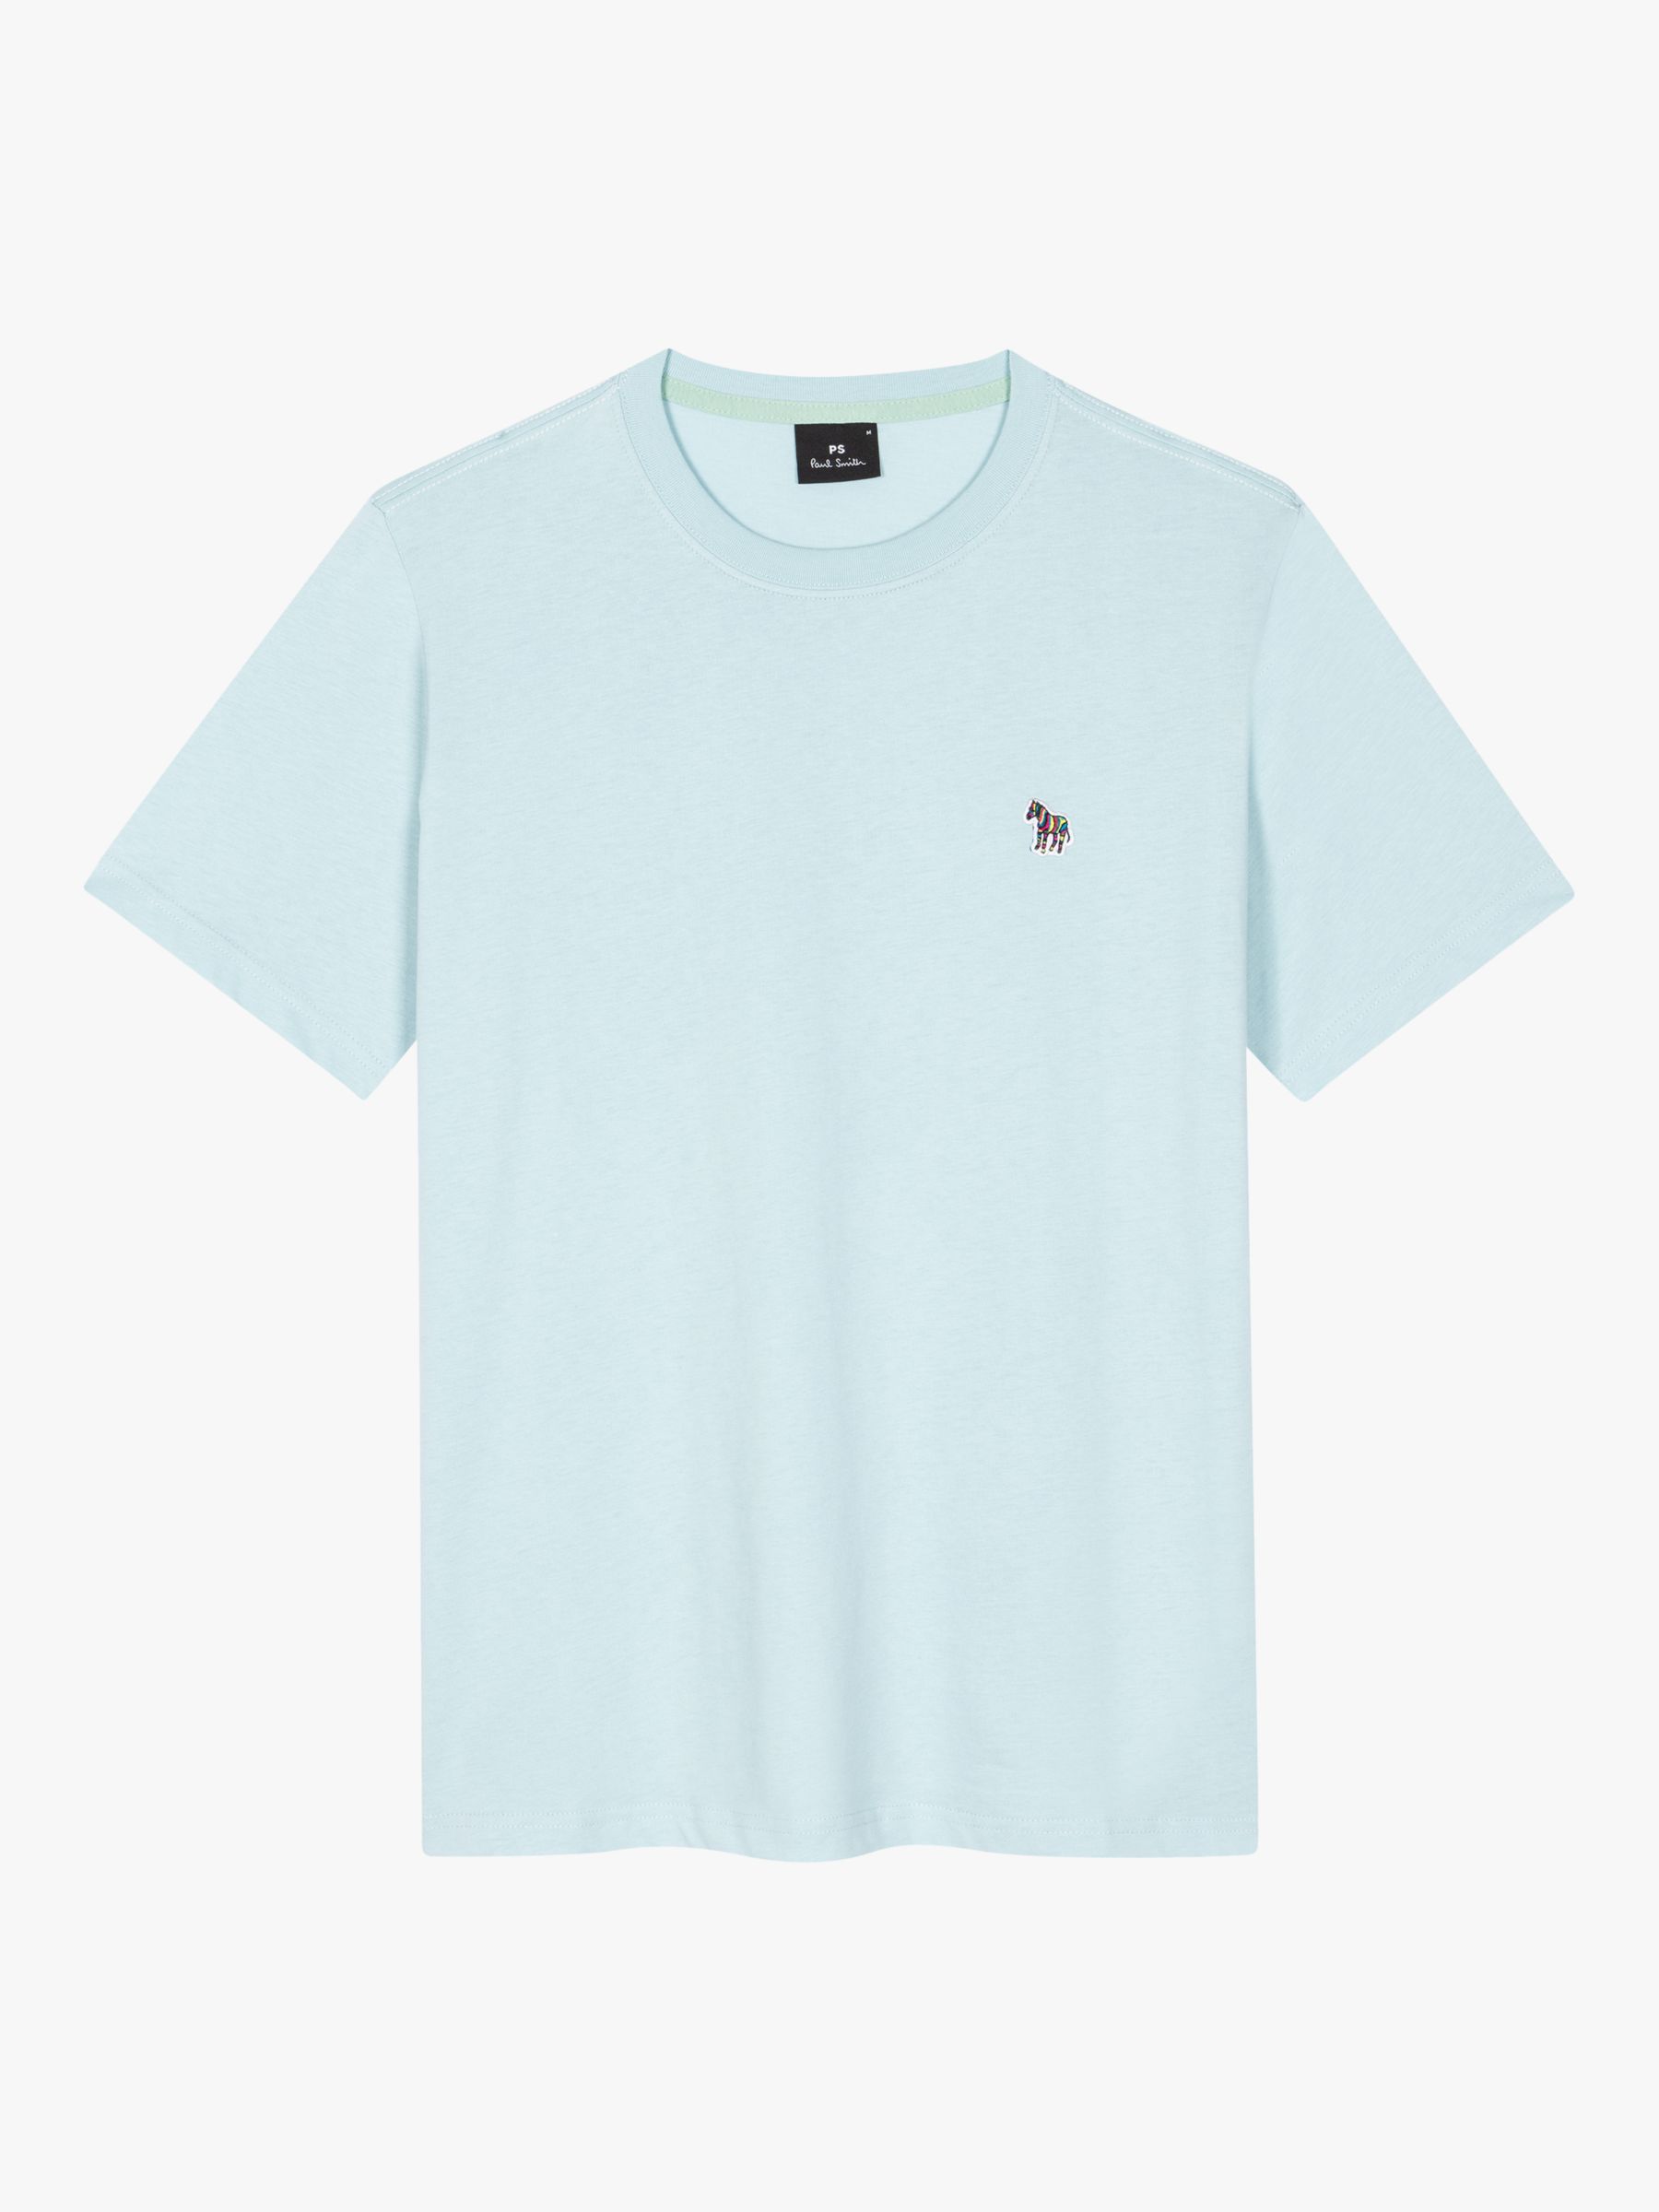 Paul Smith Organic Cotton Short Sleeve Logo T-Shirt, Blue, S